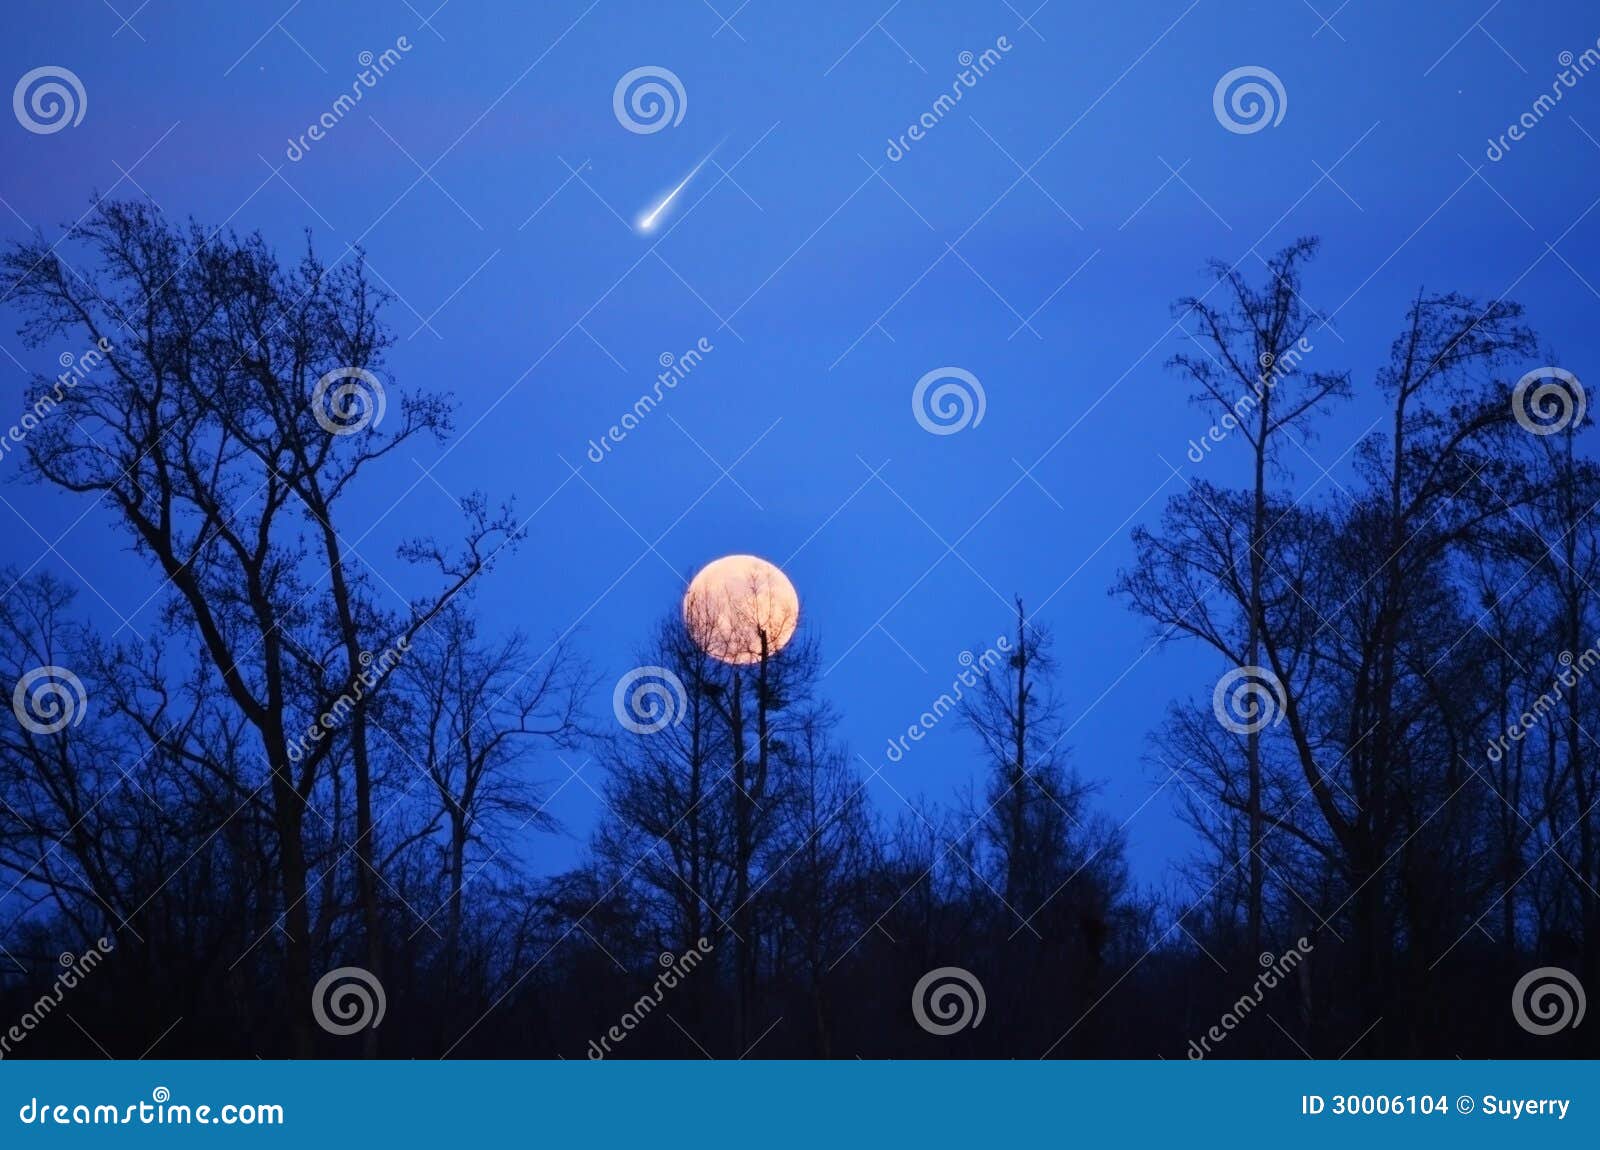 comet panstarr star in blue sky, full moon